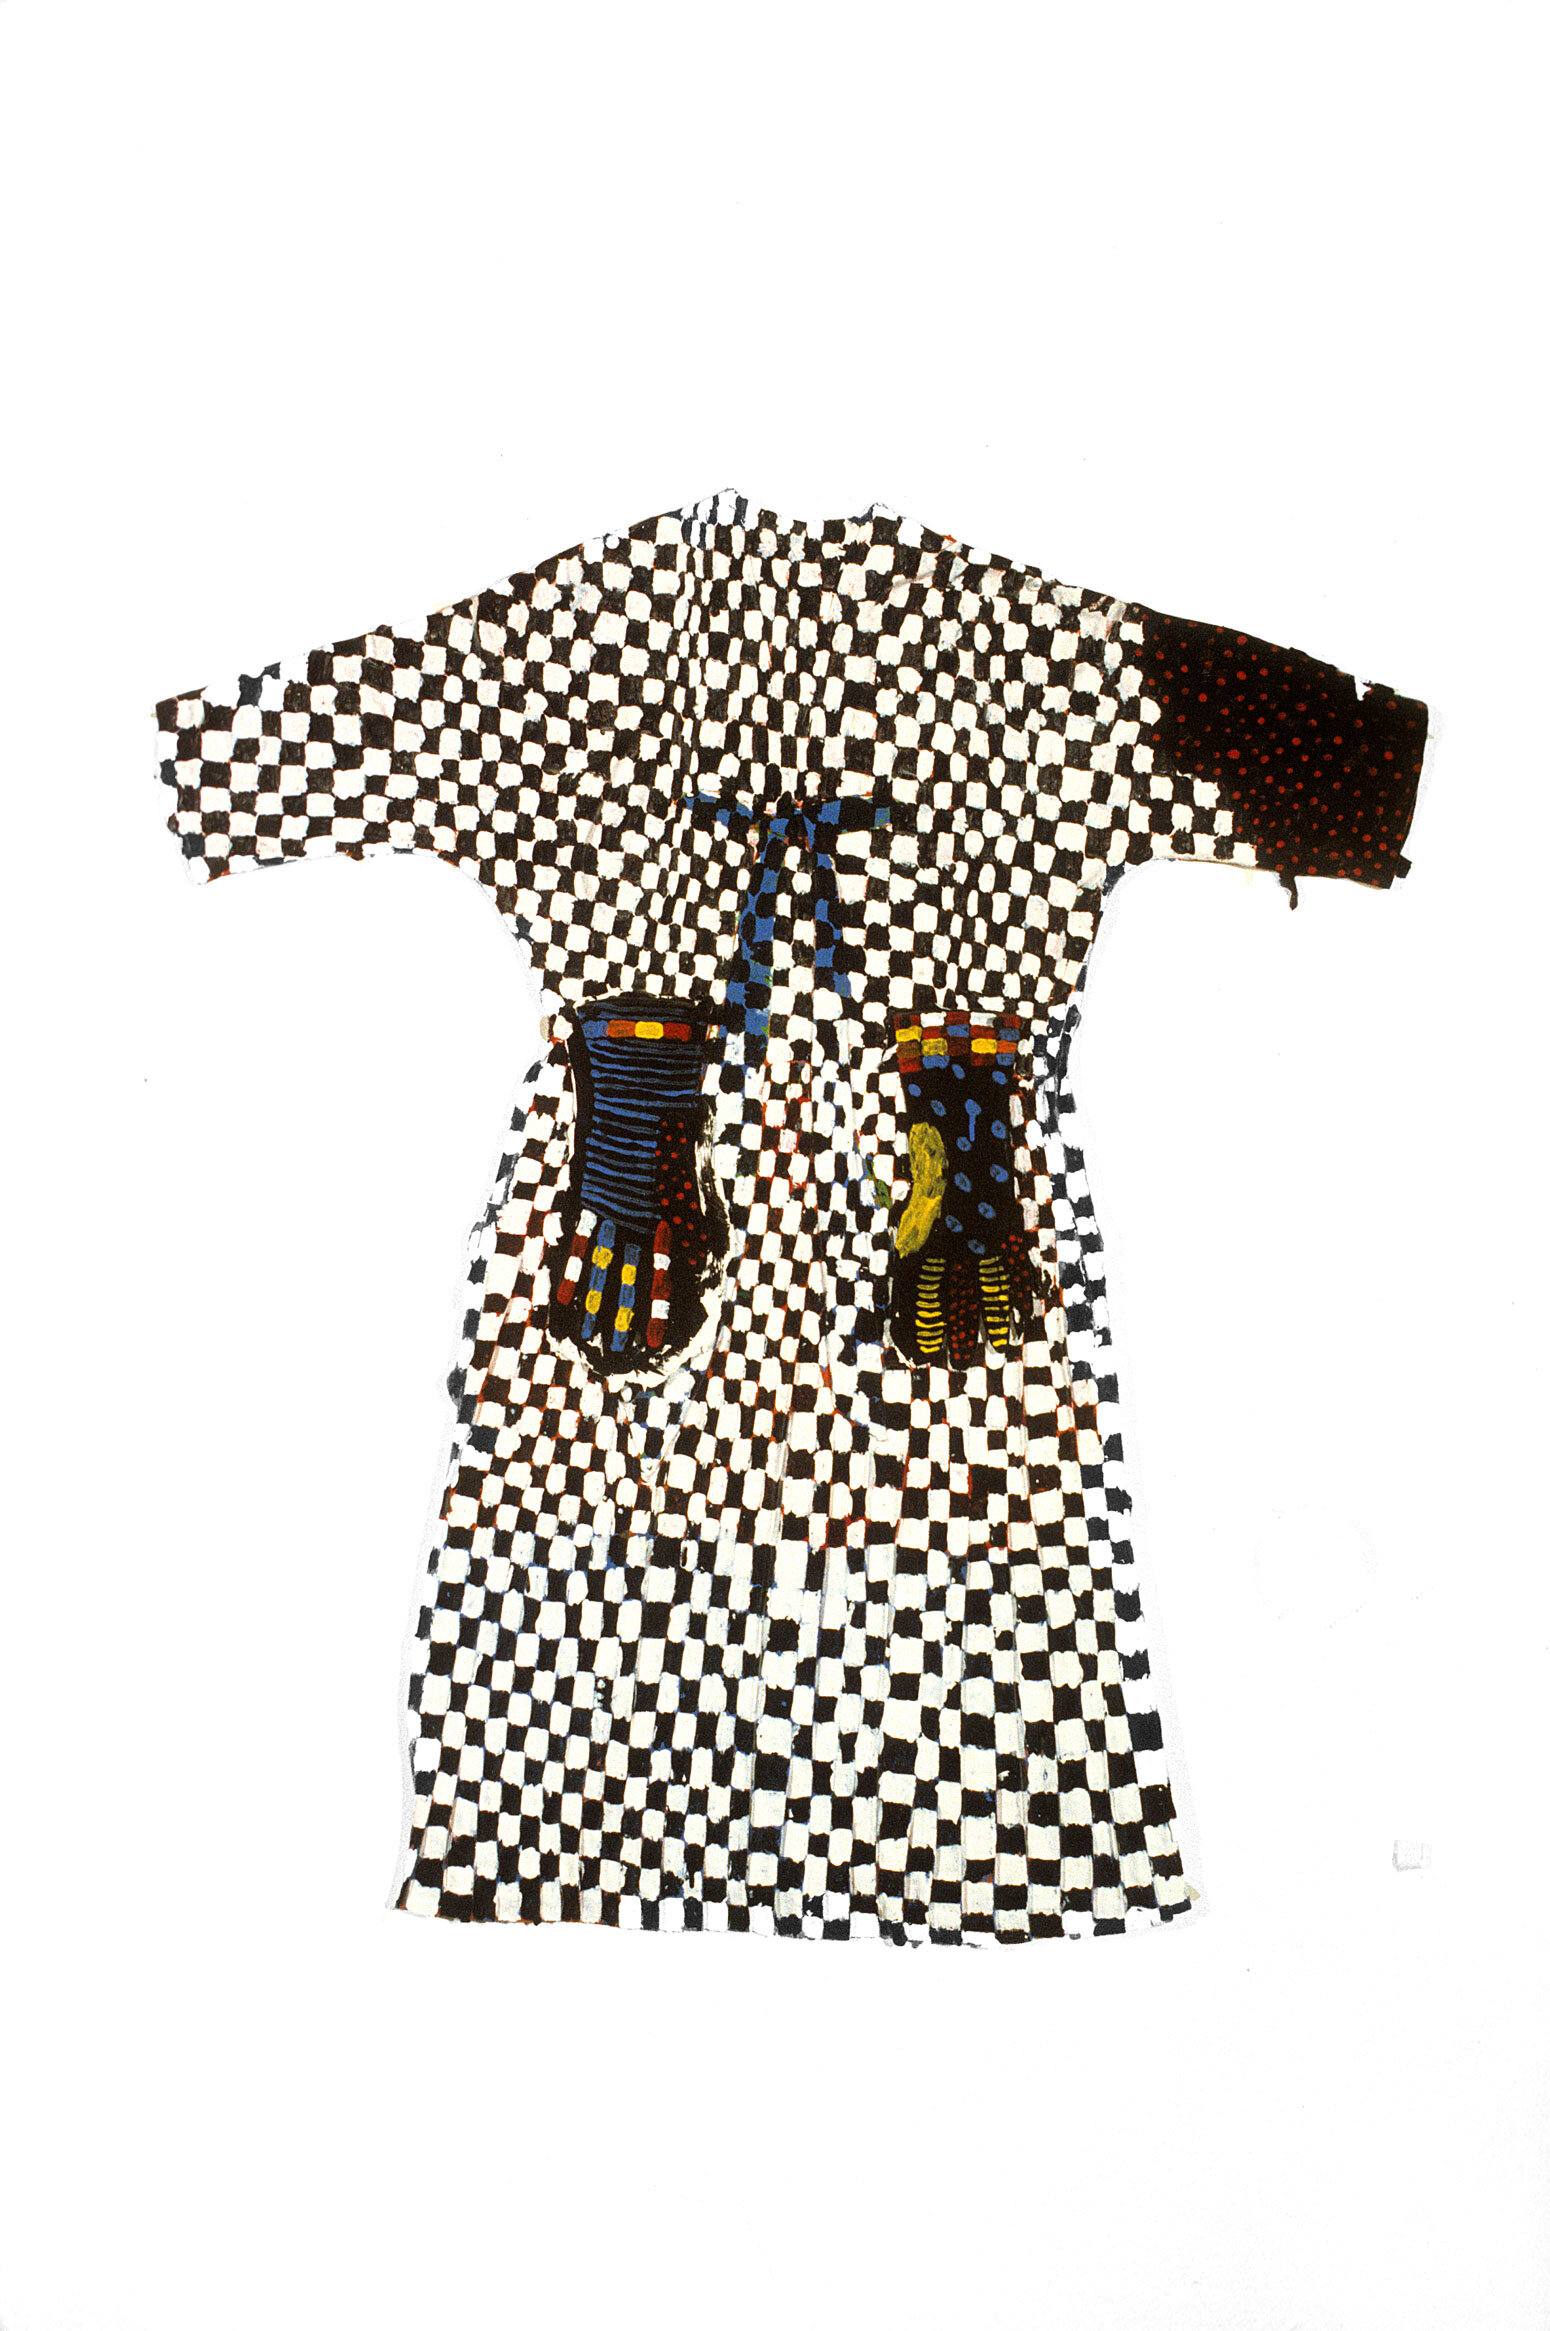   The Checkered Dress , 1979, wool pleated dress, gesso, latex enamel, acrylic, 43” x 38” 